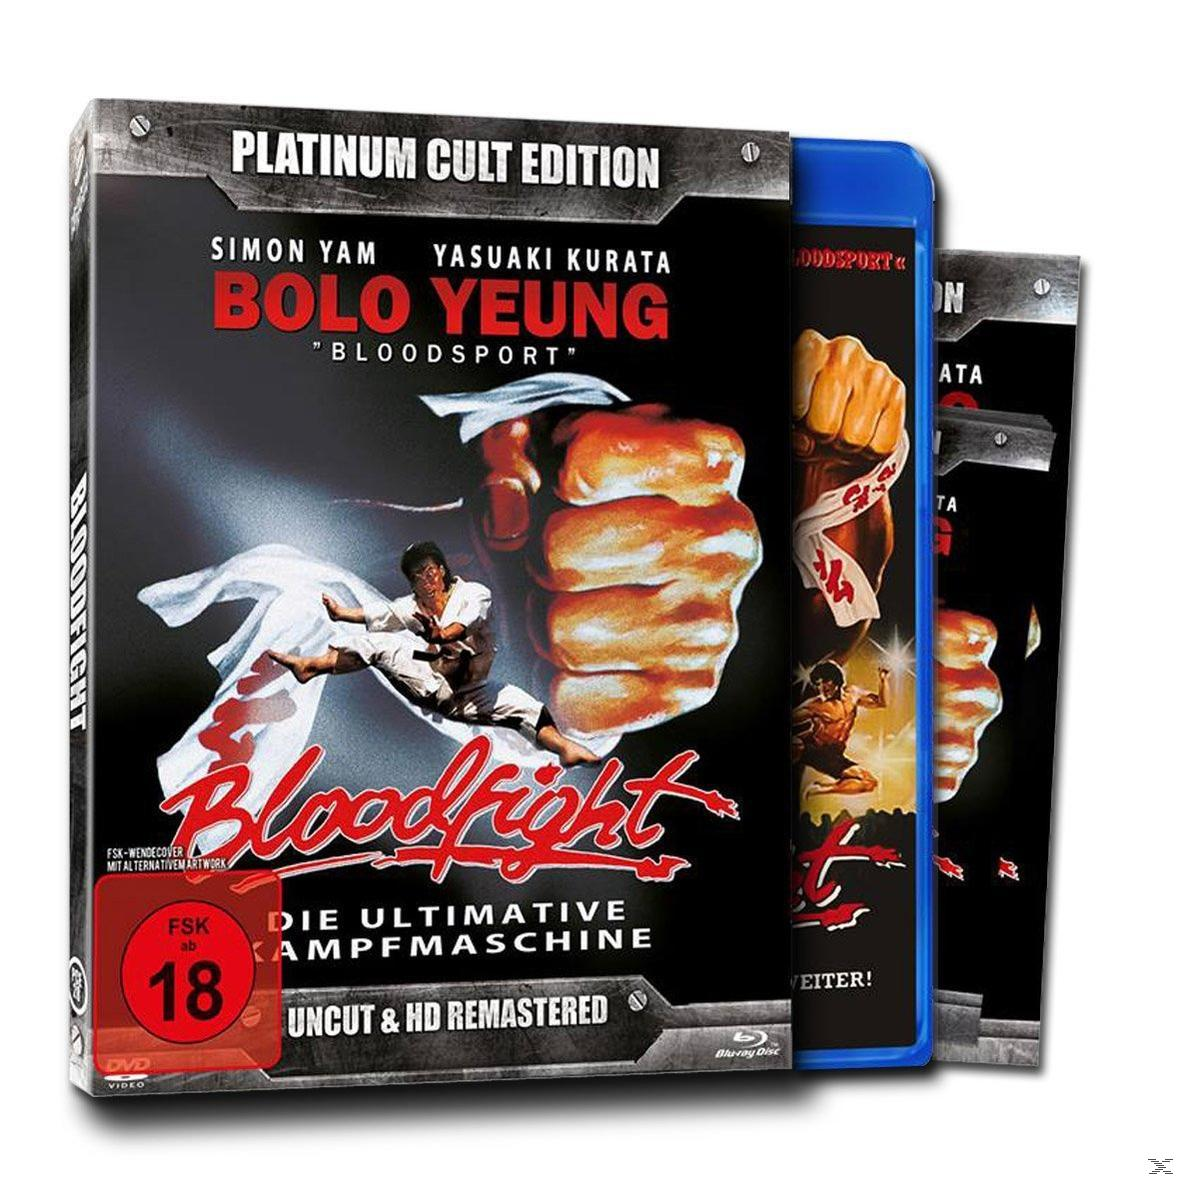 Bloodfight Blu-ray + DVD